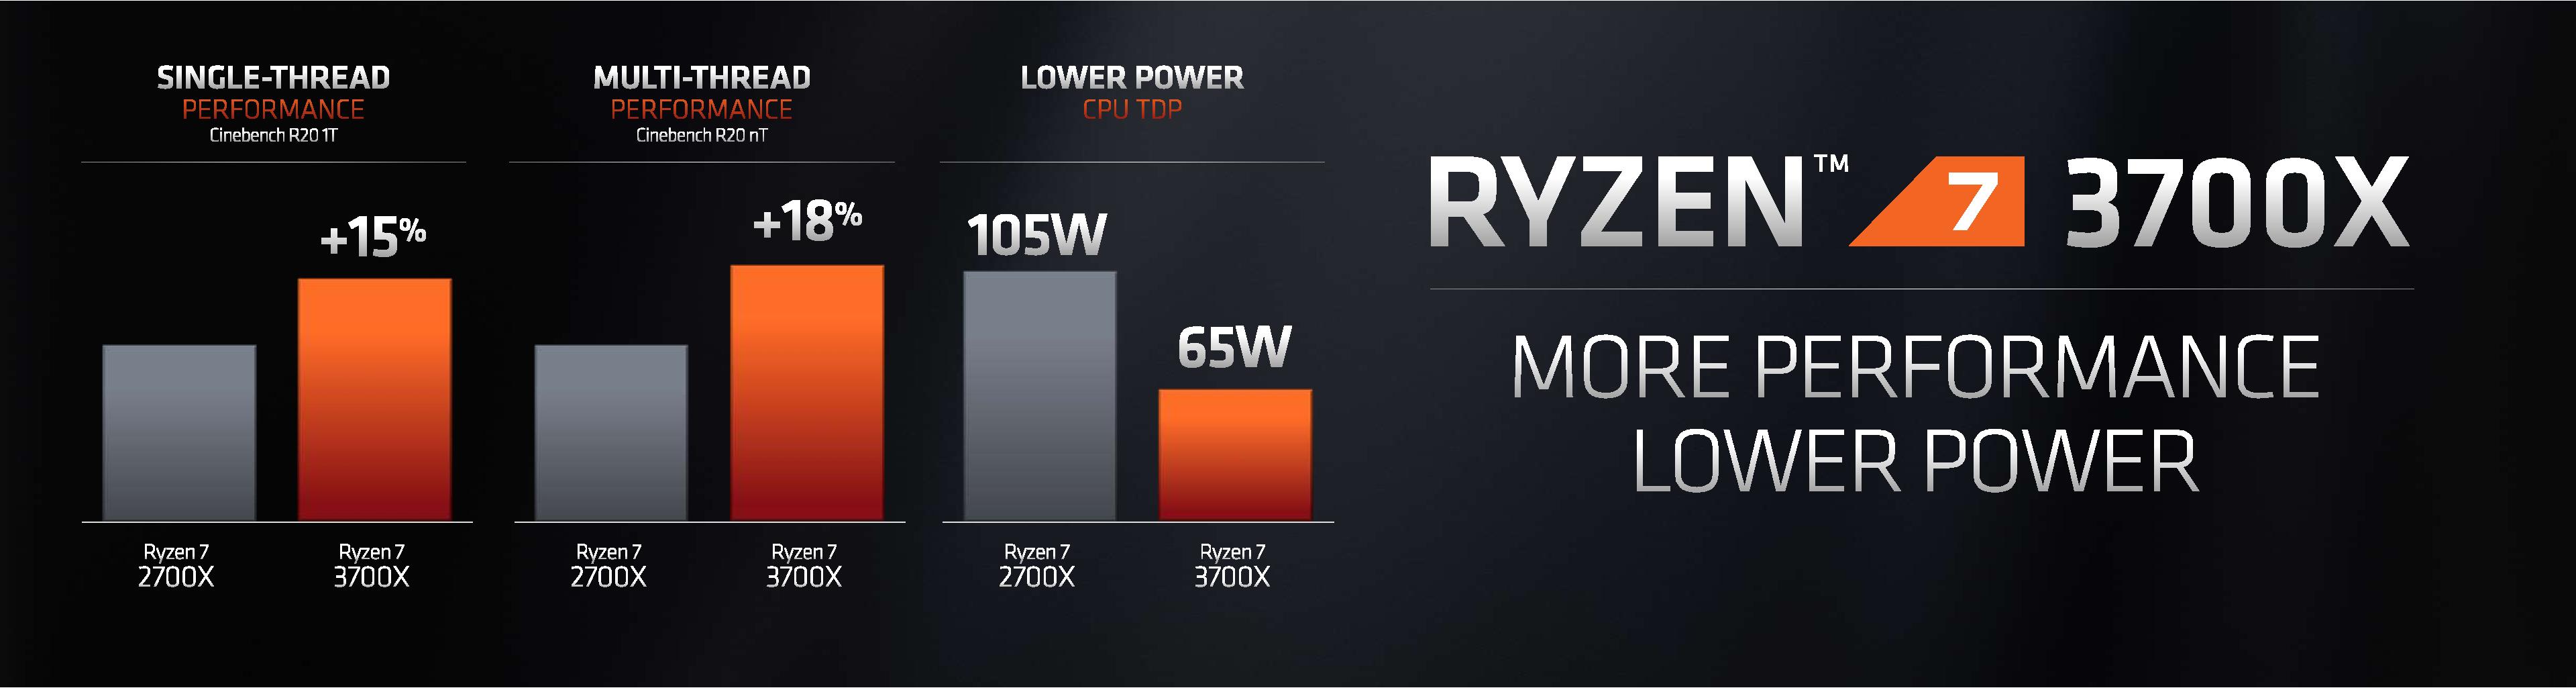 Low performance. Процессор AMD Ryzen 7 3700x. Процессор AMD Ryzen Zen 2. Процессор AMD Ryzen 9 3900x. Линейка процессоров Ryzen 7.